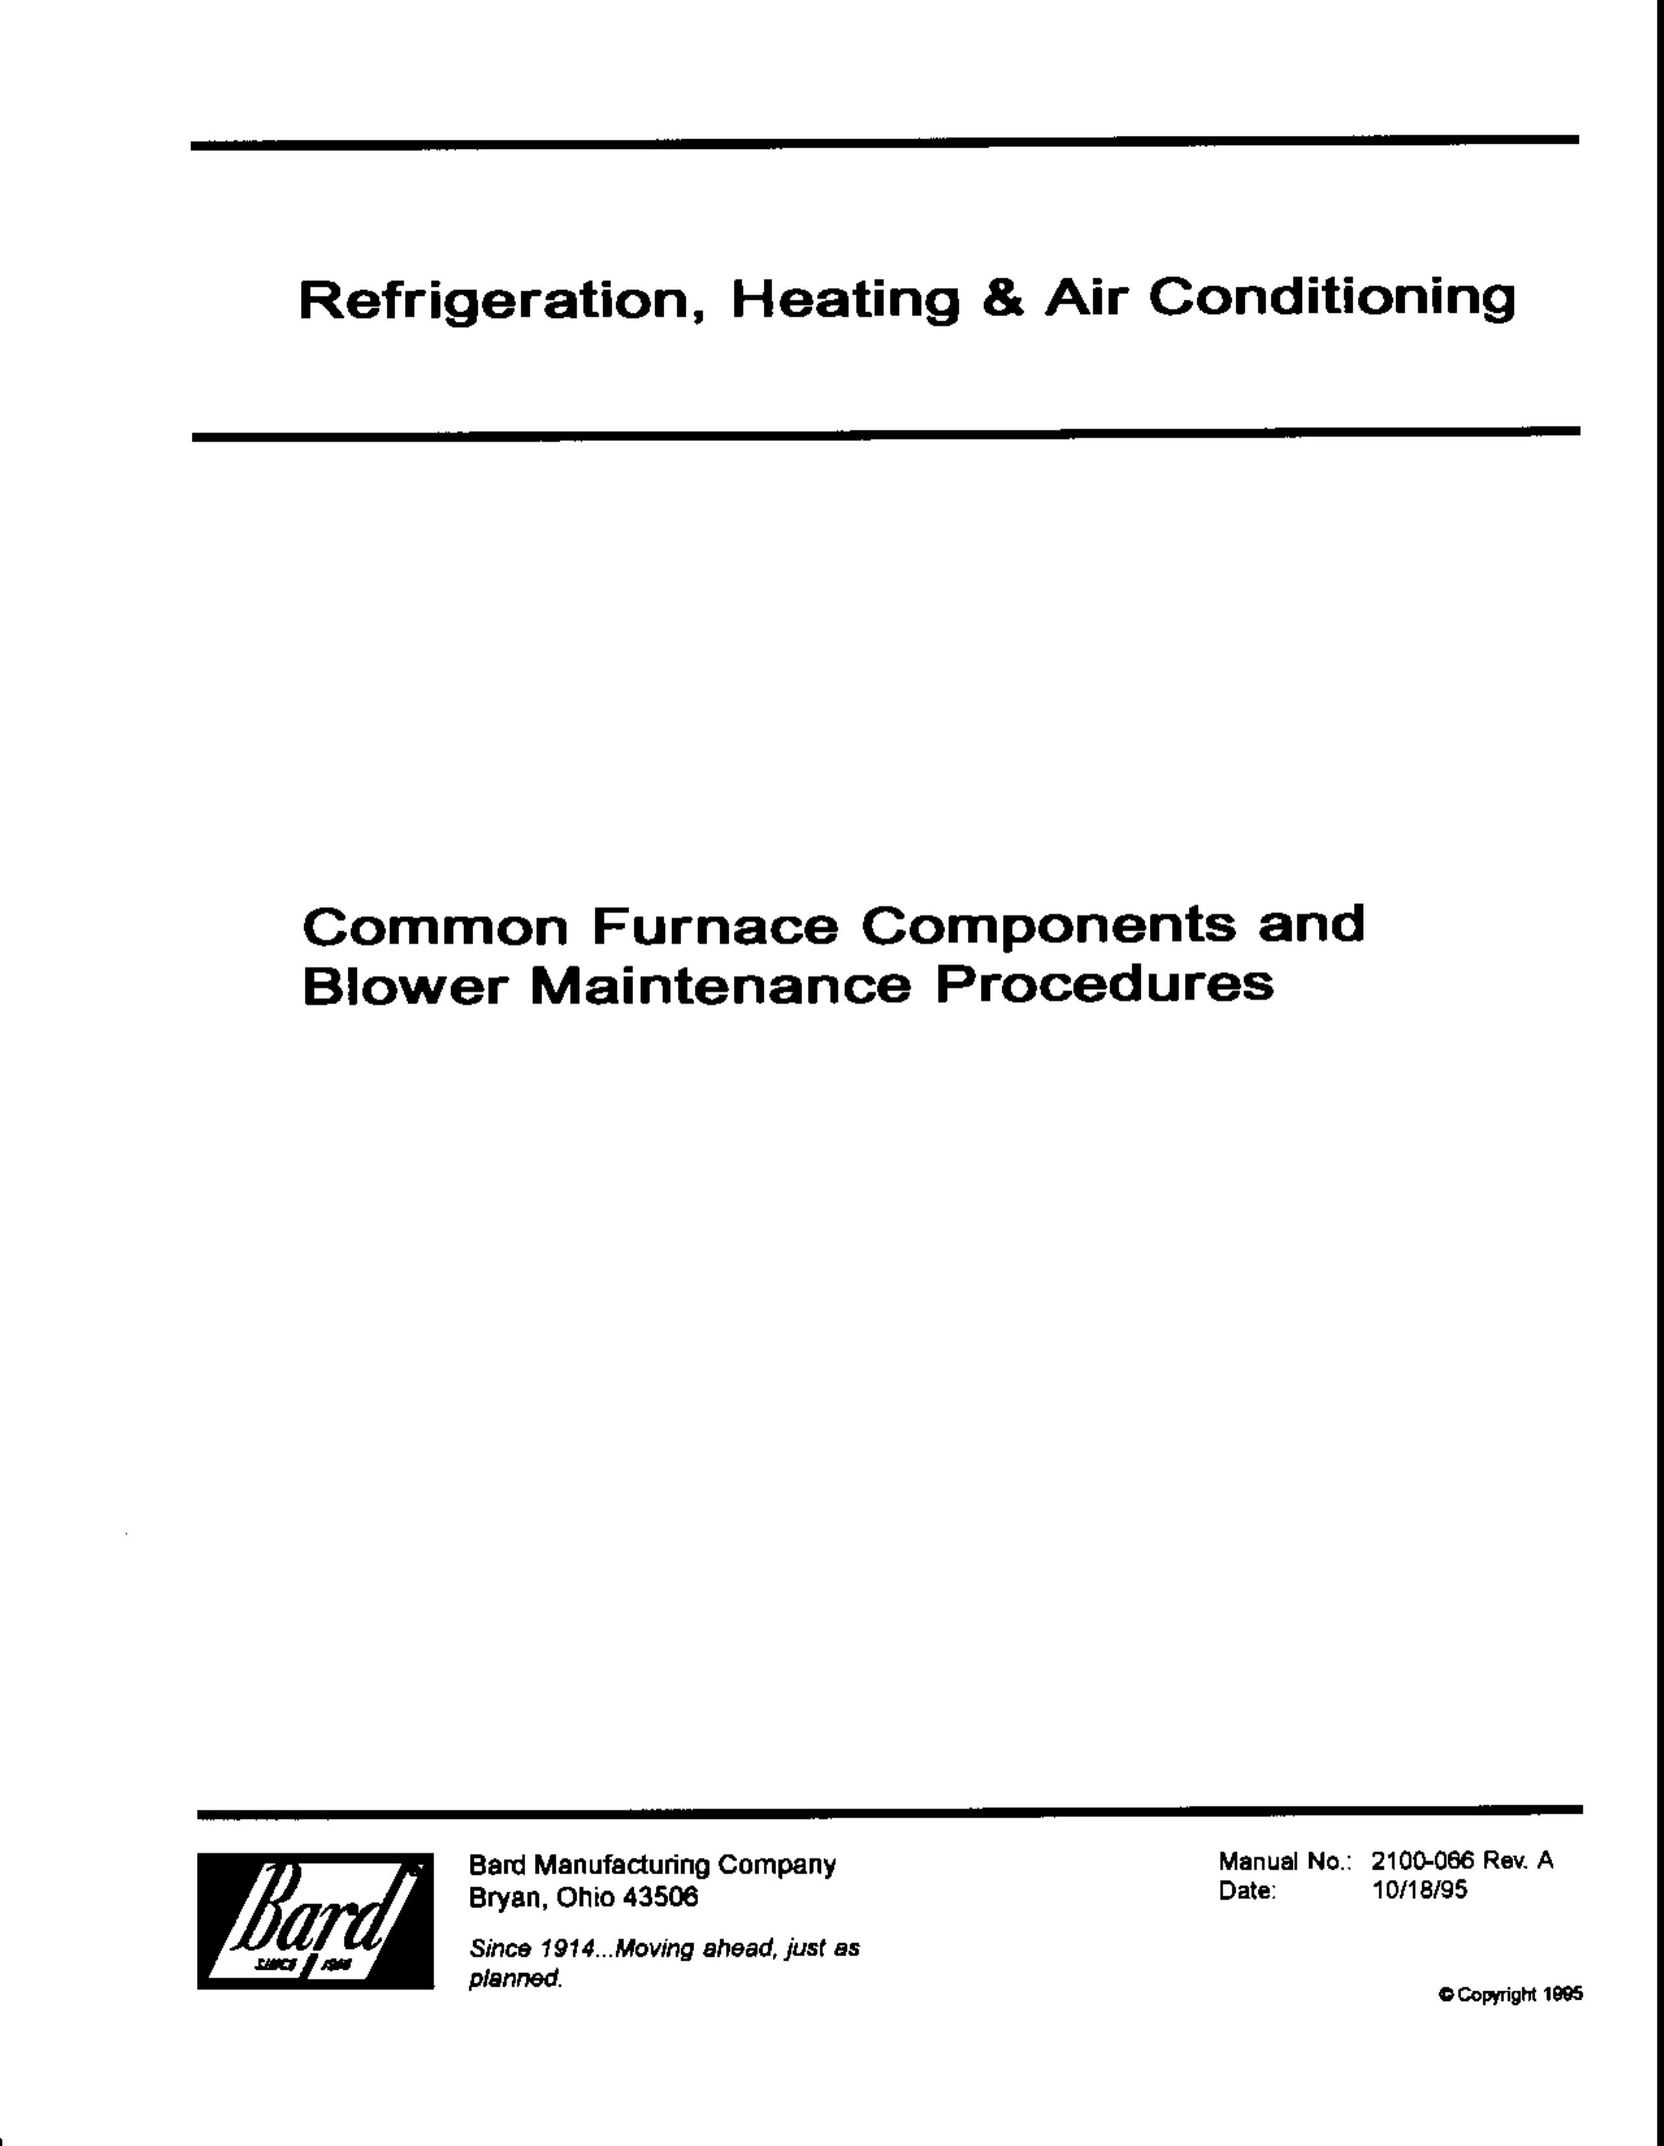 Bard 2100-066 Rev. A Furnace User Manual